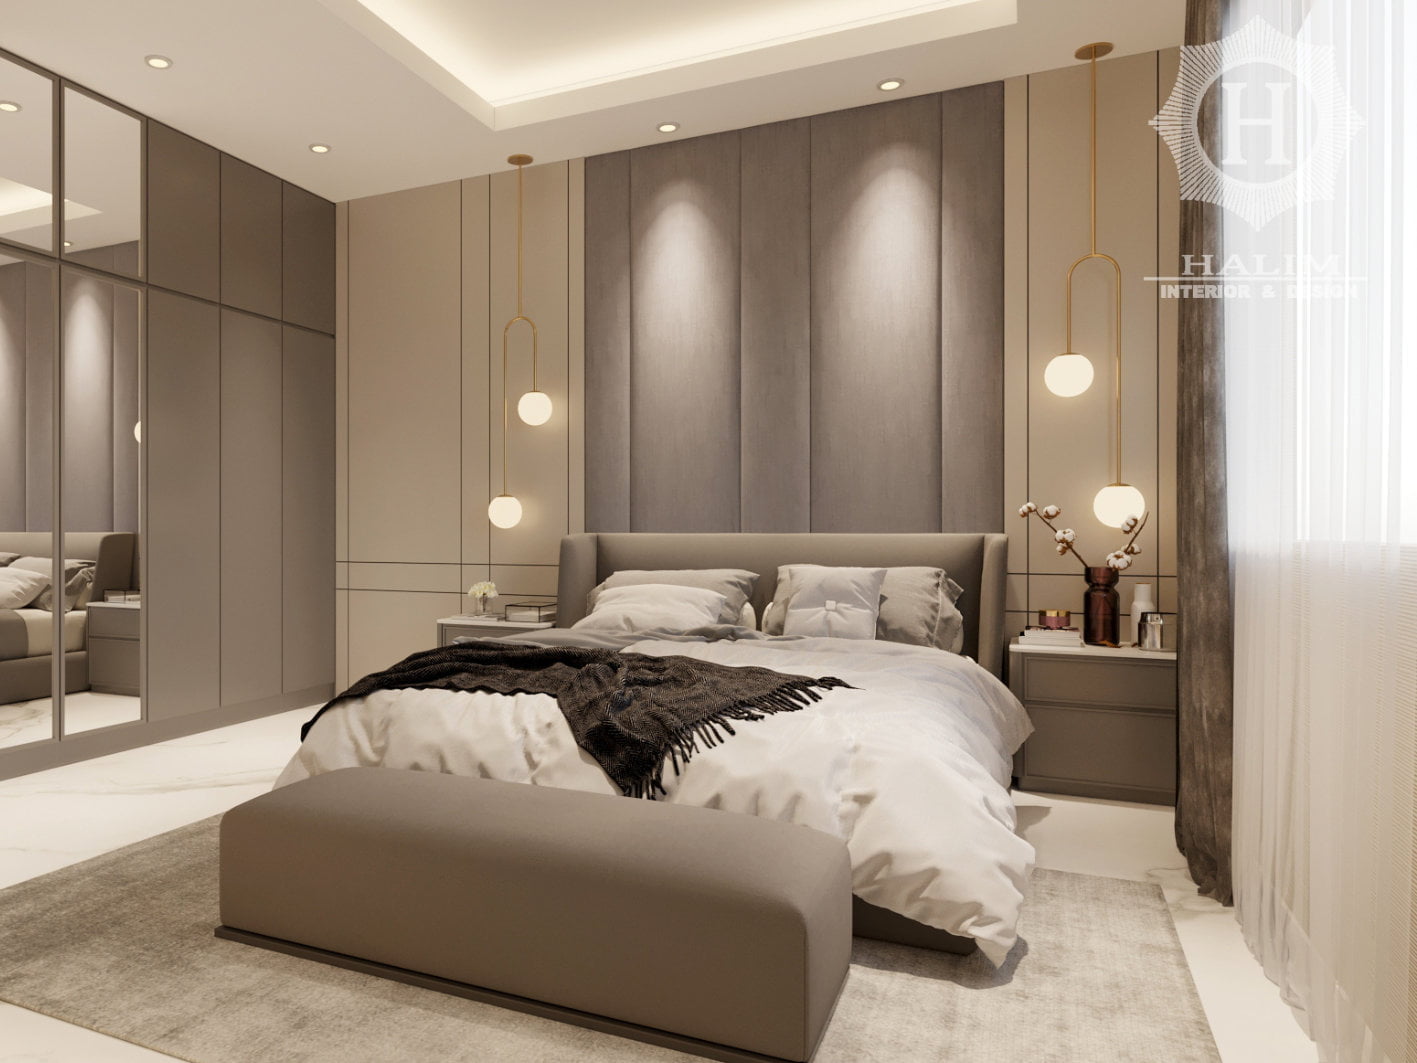 Halim Interior modern furniture contemporer american style minimalist european classic surabaya 80.Galaxy Bumi Permai thumb 28 Oktober 2021